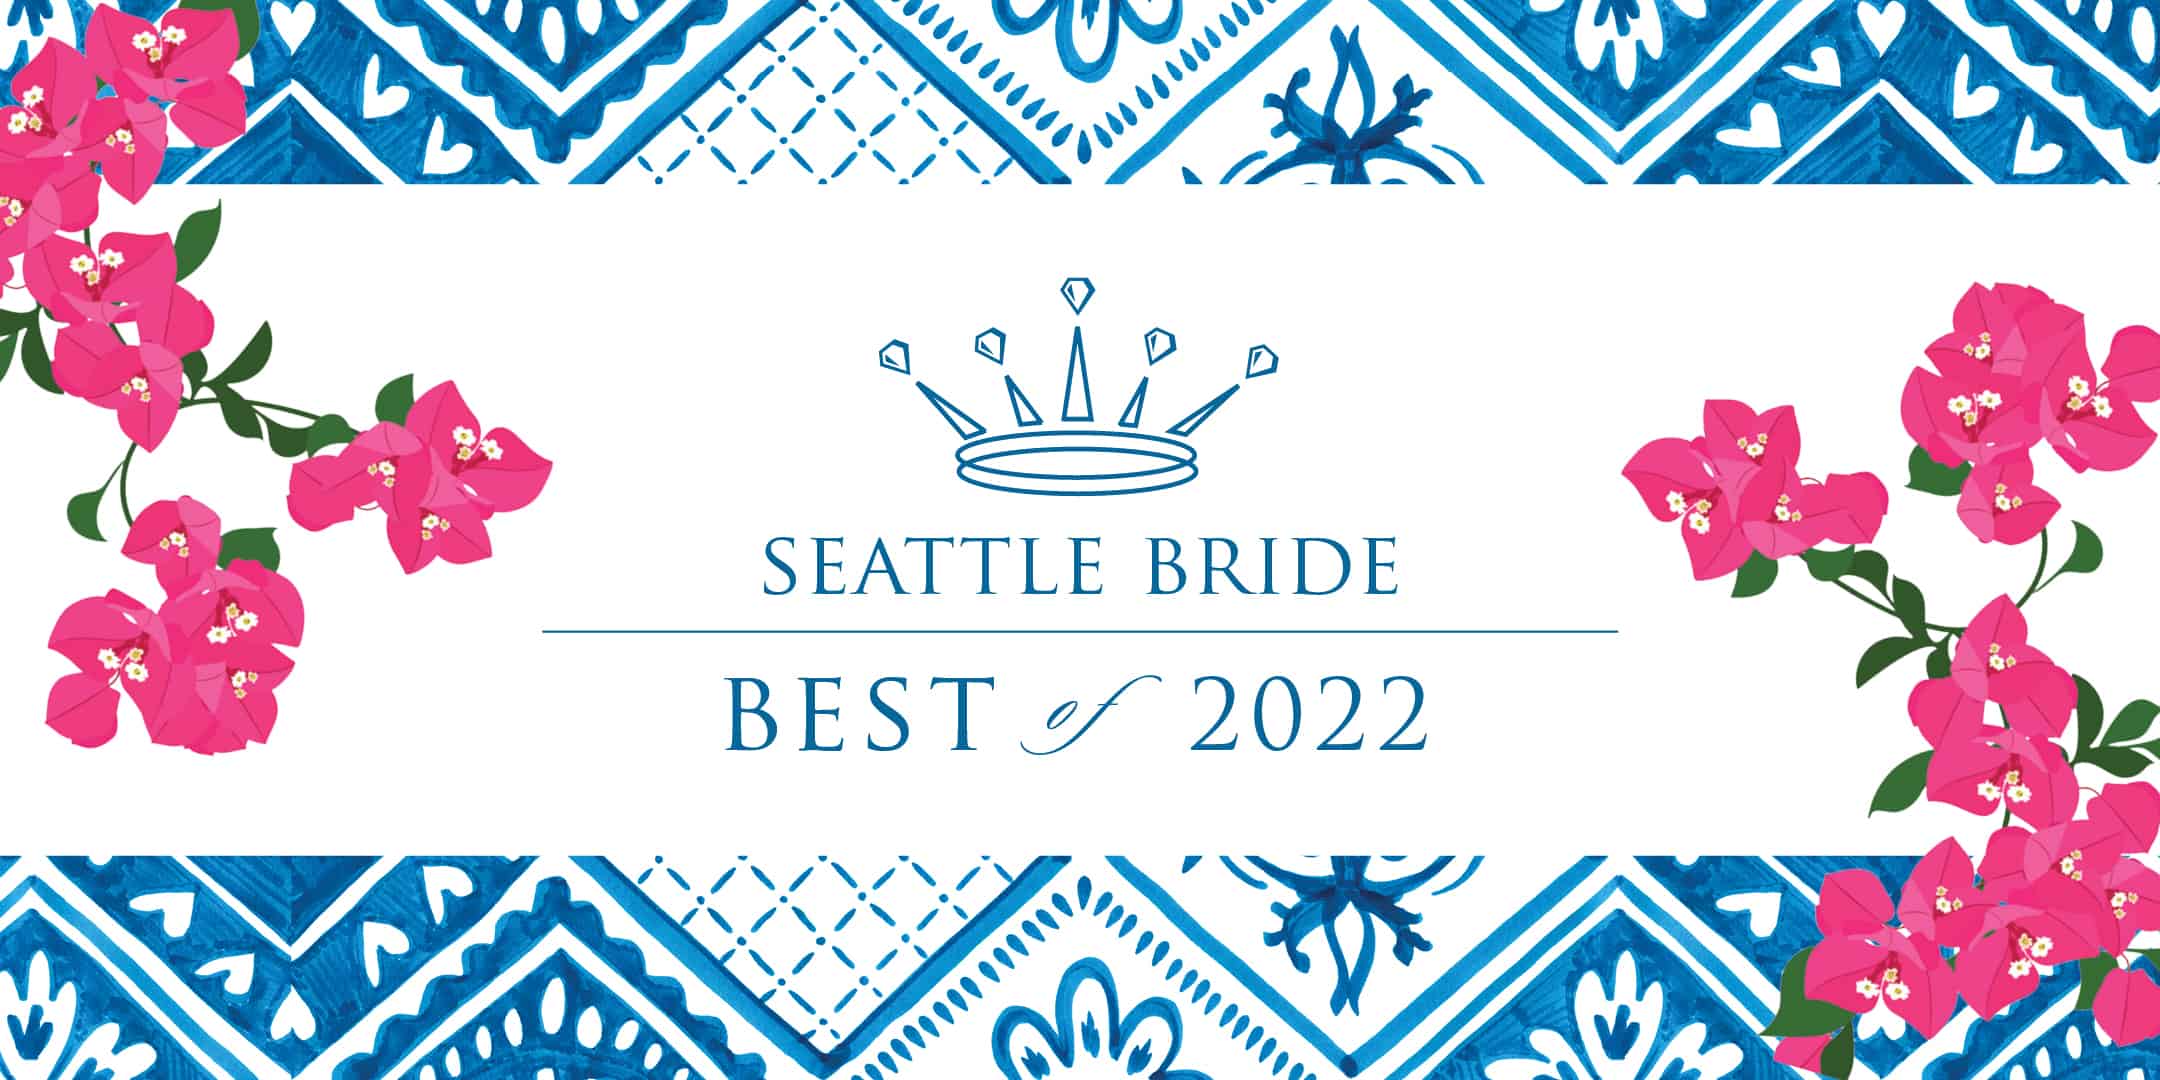 'Best Of 2022' - Seattle Bride Magazine, Best Officiant. - Seattle Wedding Officiant & Minister, Annemarie Juhlian